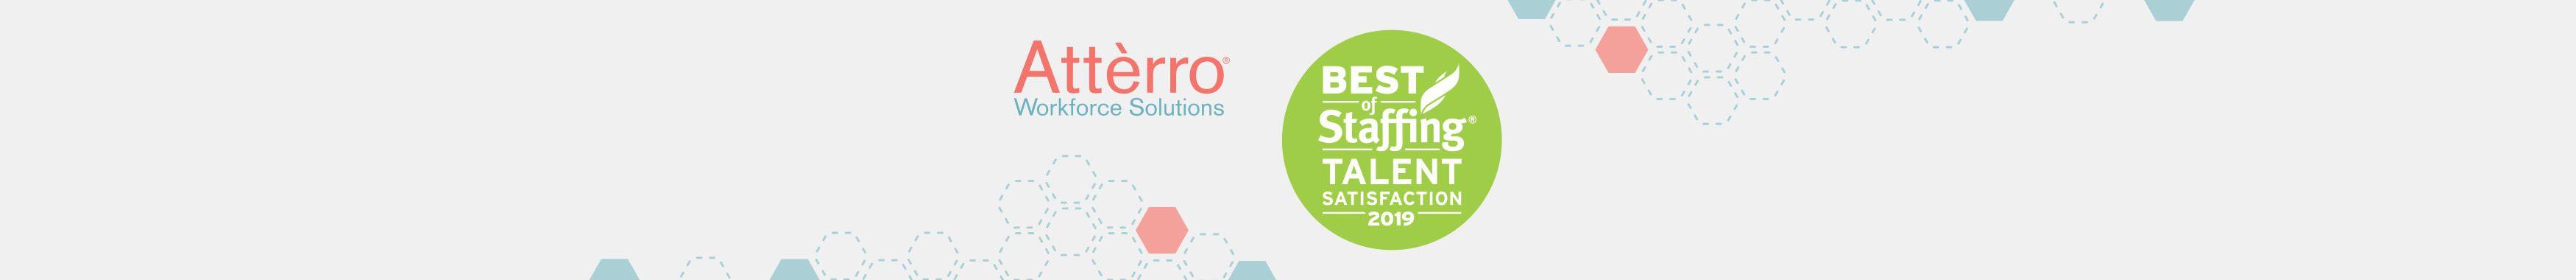 Atterro Logo - Specialty Staffing & Contingent Workforce Solutions | Atterro